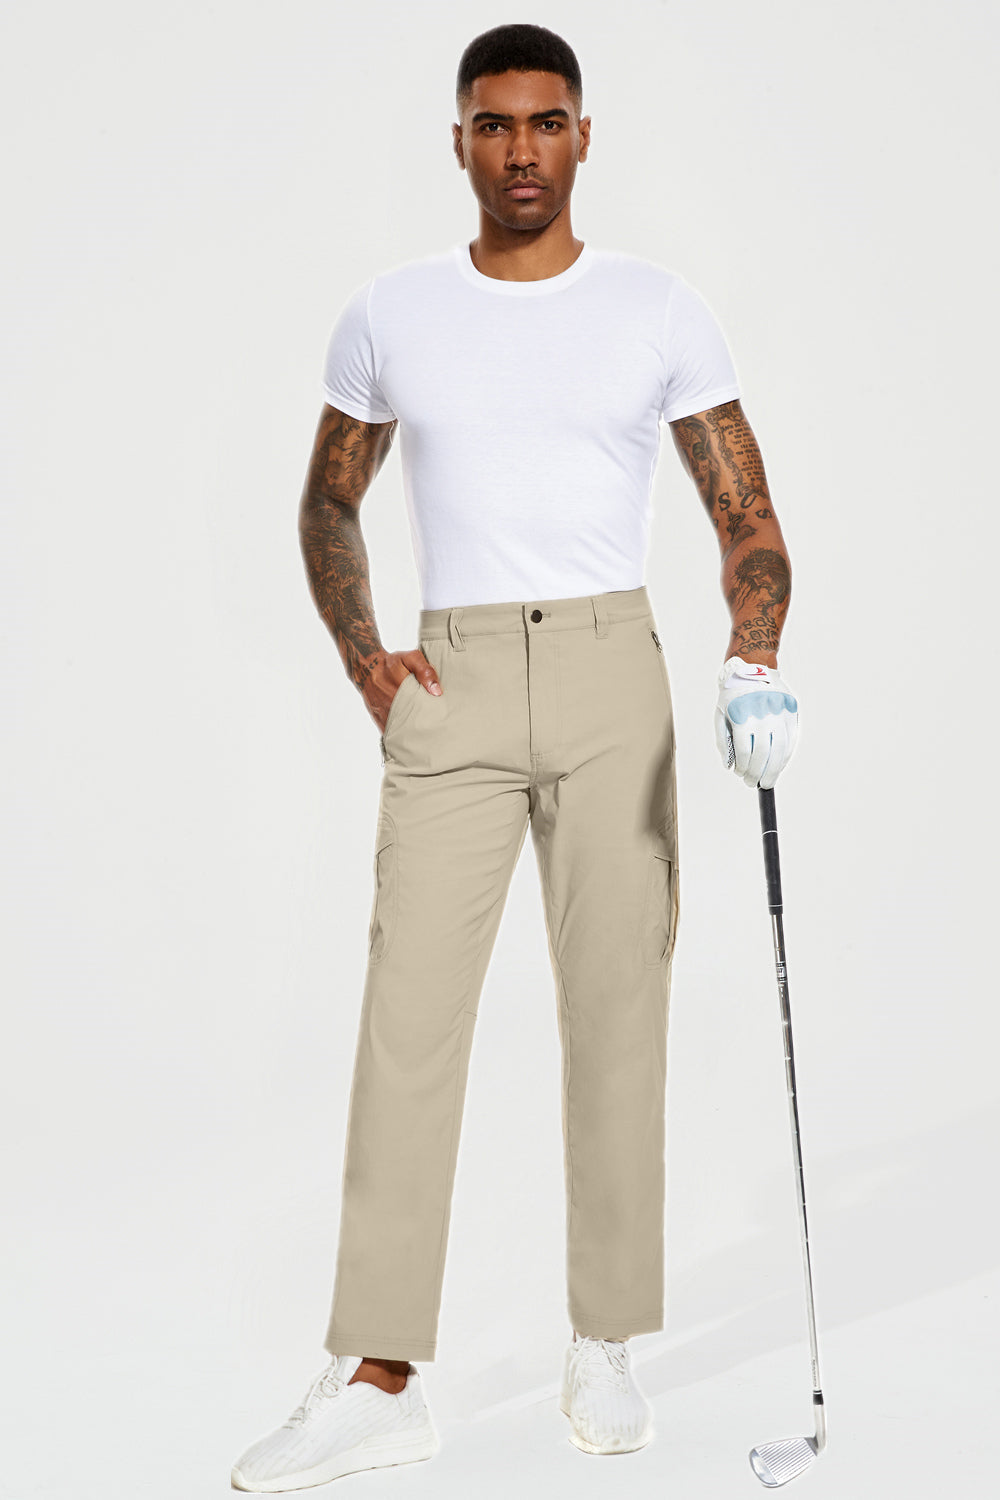 PULI Men's Stretch Golf Pants with Cargo Pockets Waterproof Slim